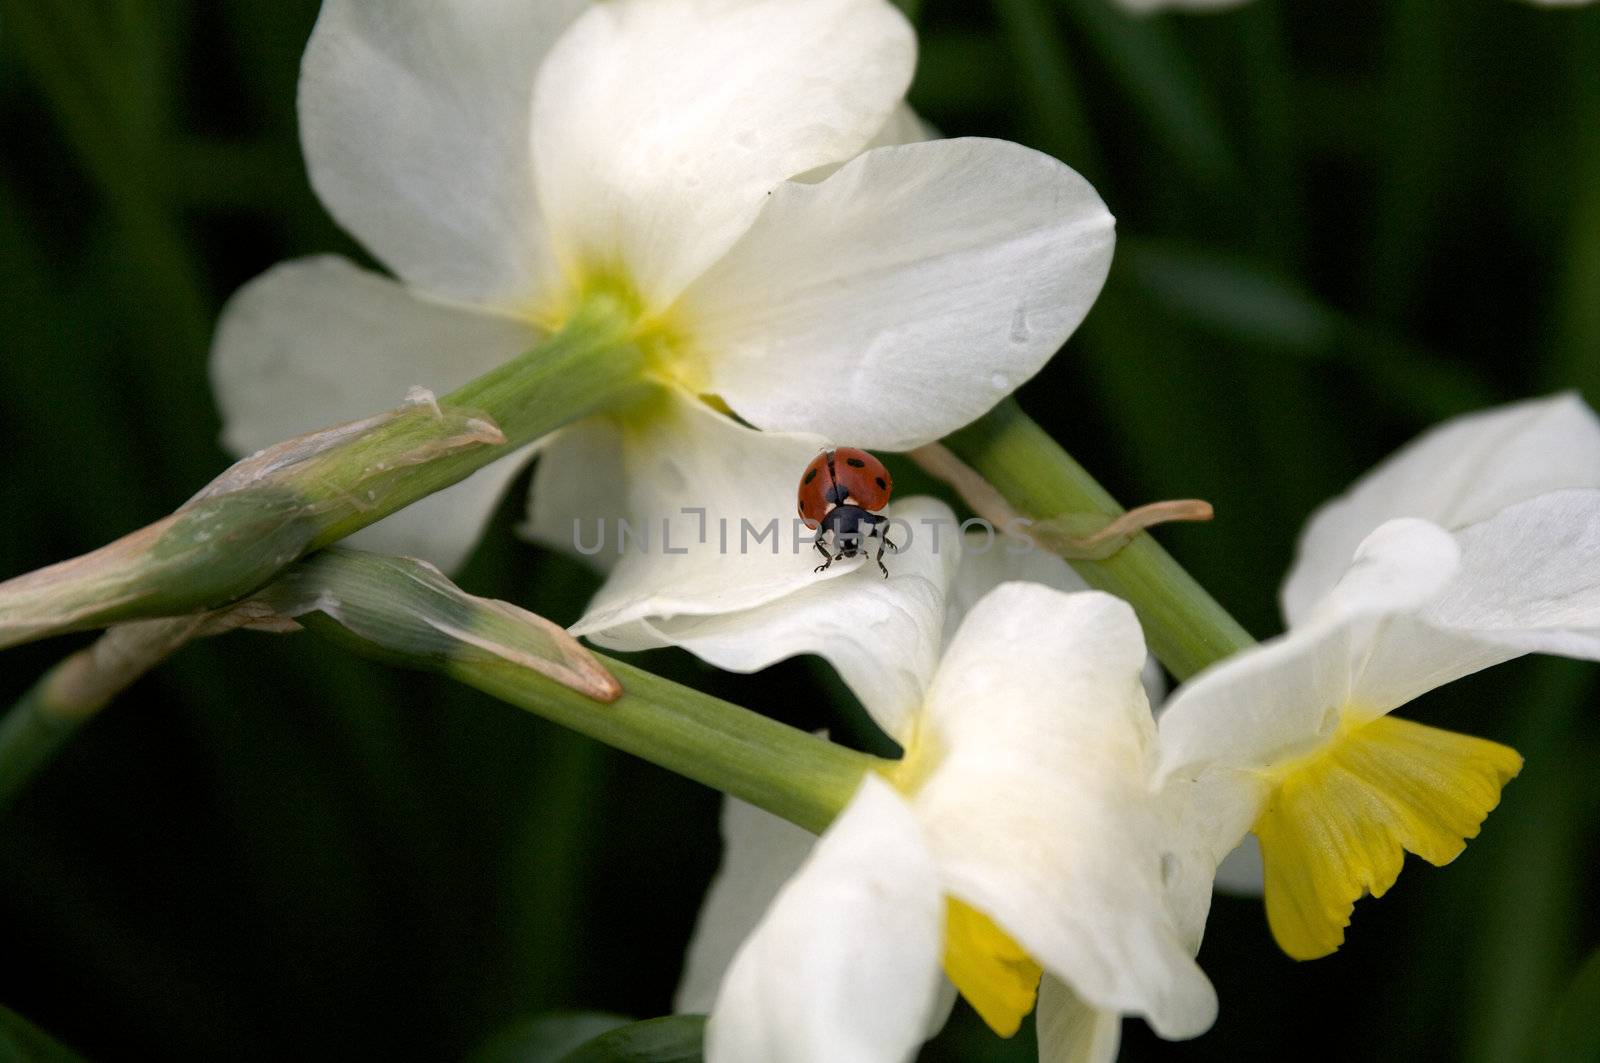 Ladybug into narcissus flowers by zhekos